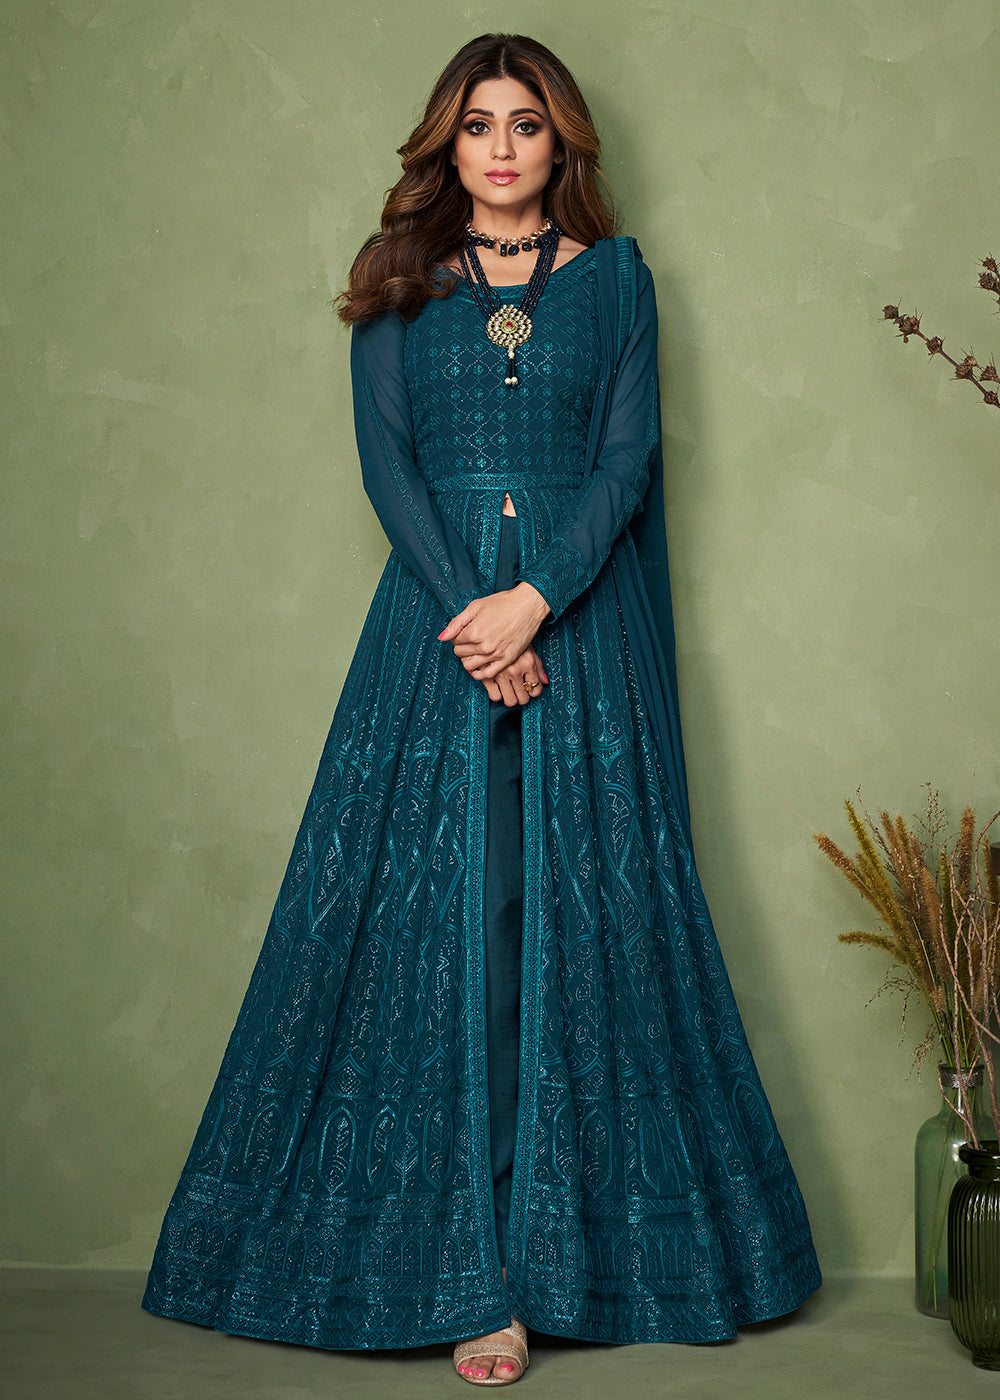 Buy Teal Blue Wedding Party Wear Anarkali - Shamita Shetty Anarkali